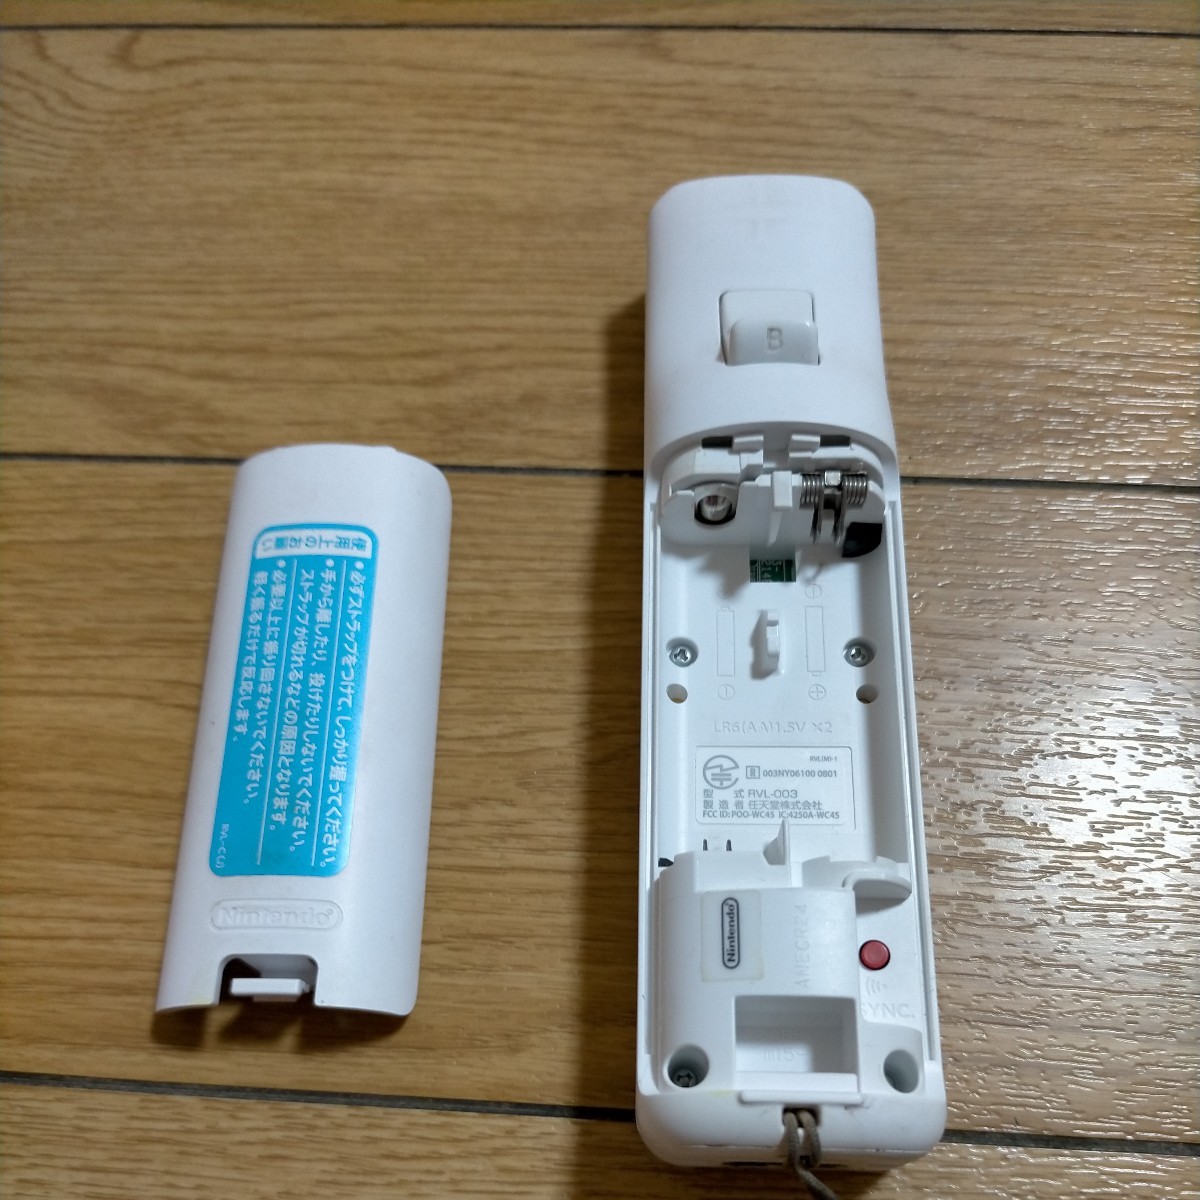 *[ Junk ] nintendo Nintendo Wii remote control controller RVL-003 black jacket attaching (RVL-027) operation not yet verification 